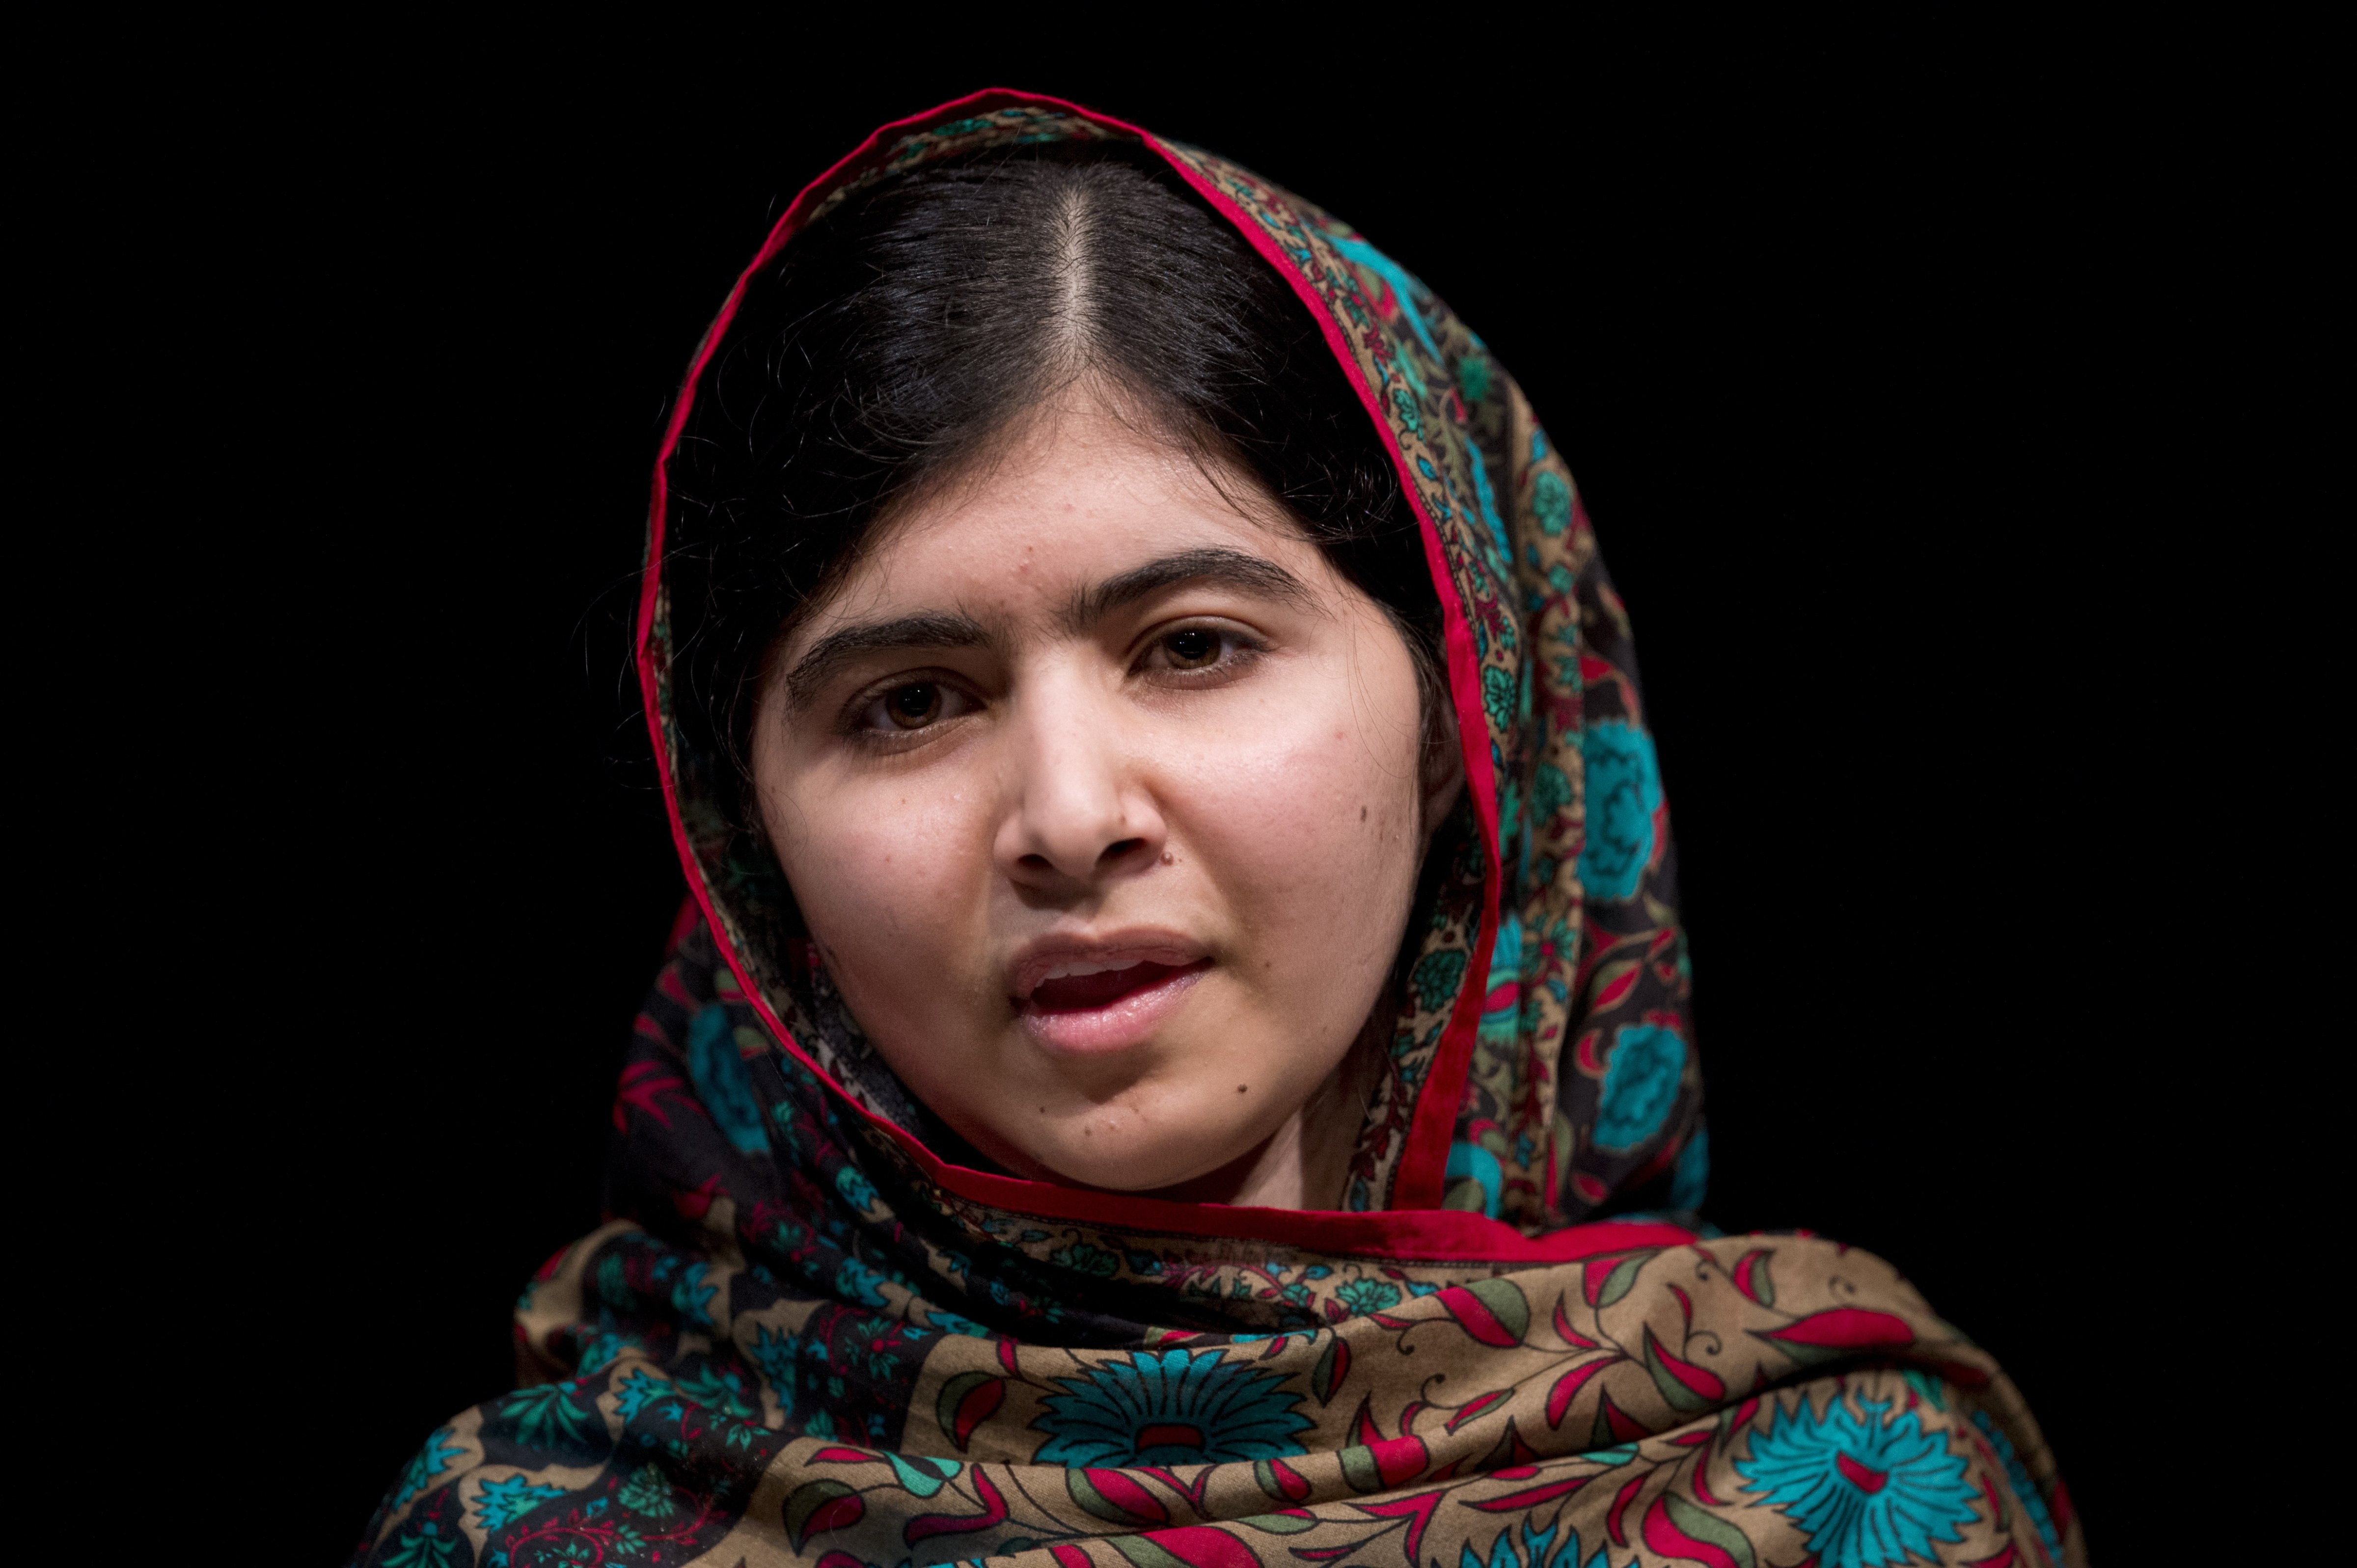 Pakistani rights activist Malala Yousafzai addresses the media in Birmingham, England on October 10, 2014. (OLI SCARFF–AFP/Getty Images)